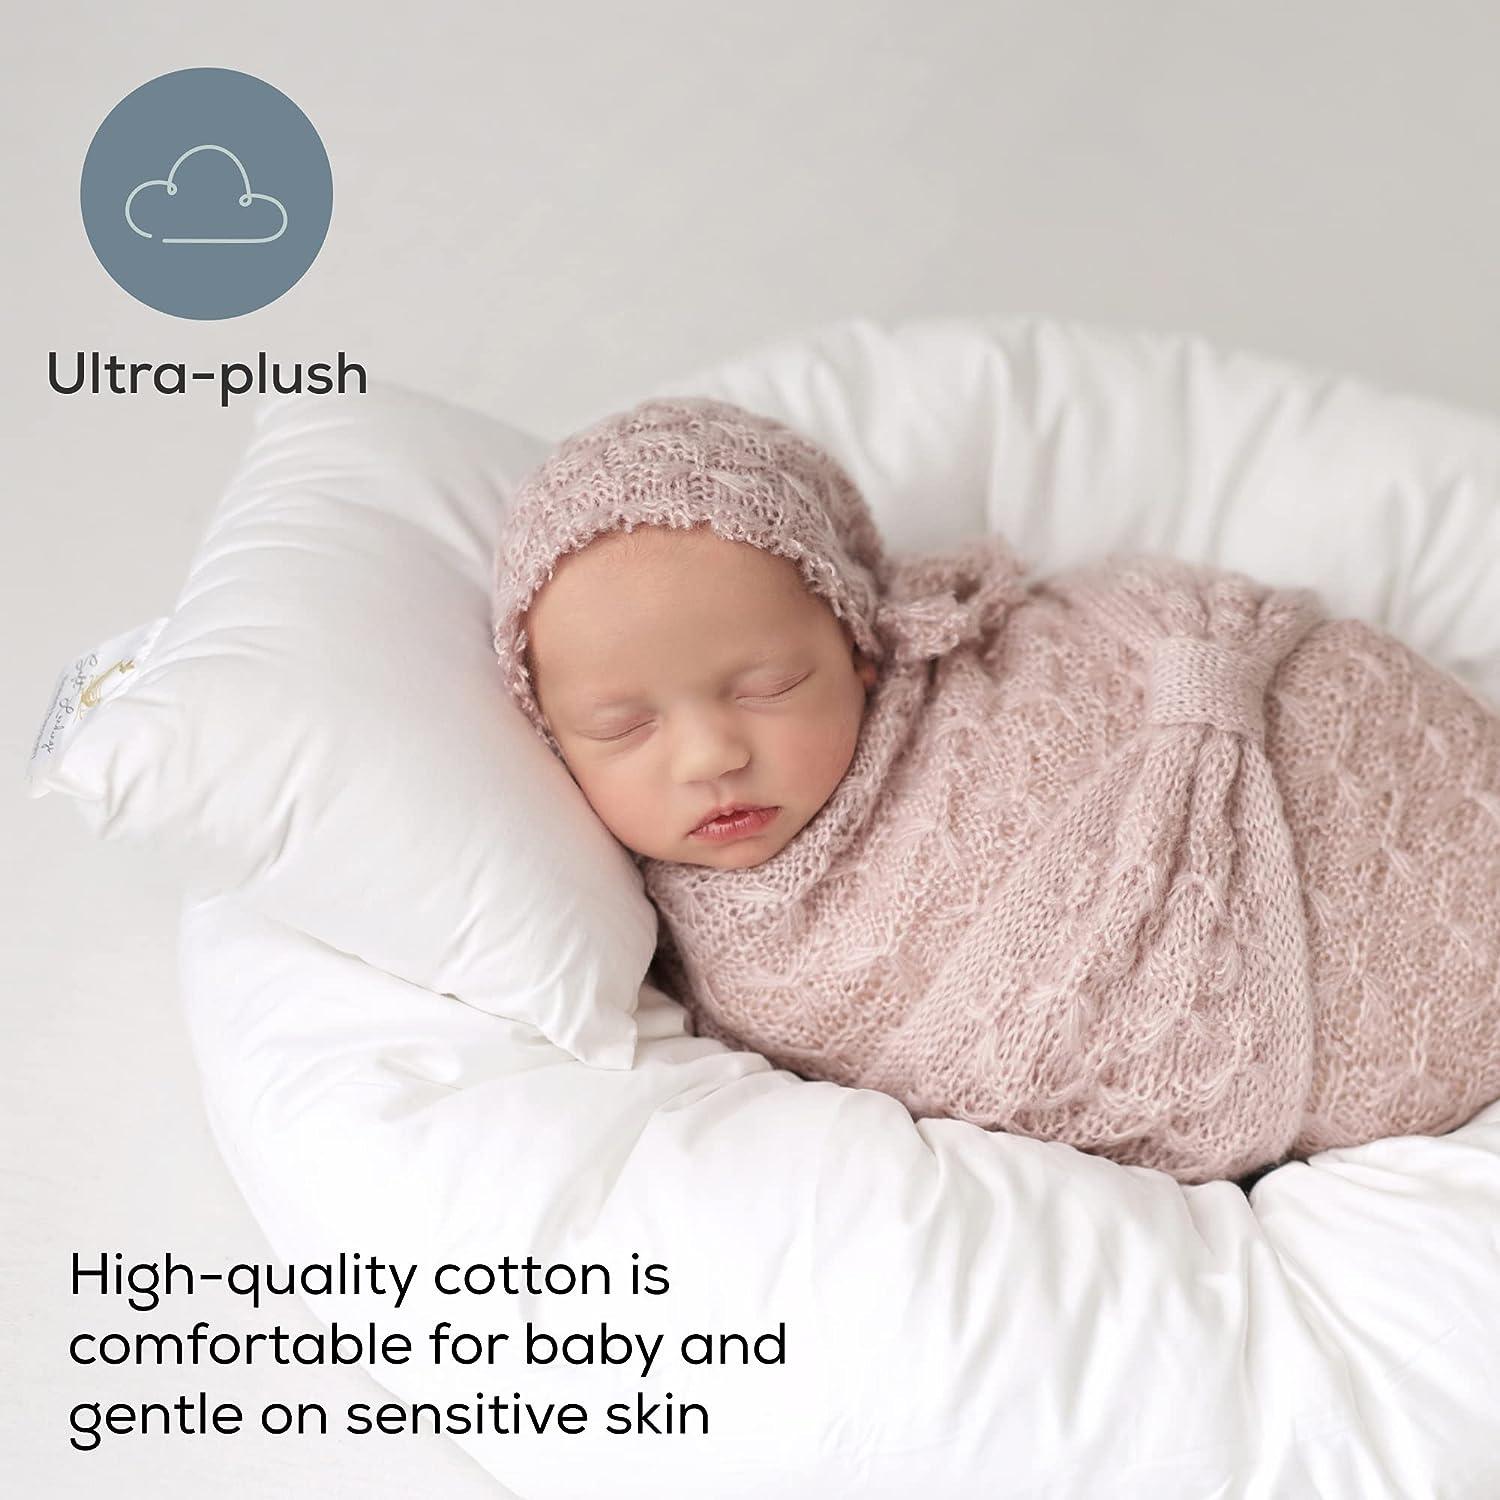 Newborn Photo Props Newborn Pillow Baby Pillow for Baby Photography Shoot |  Wish